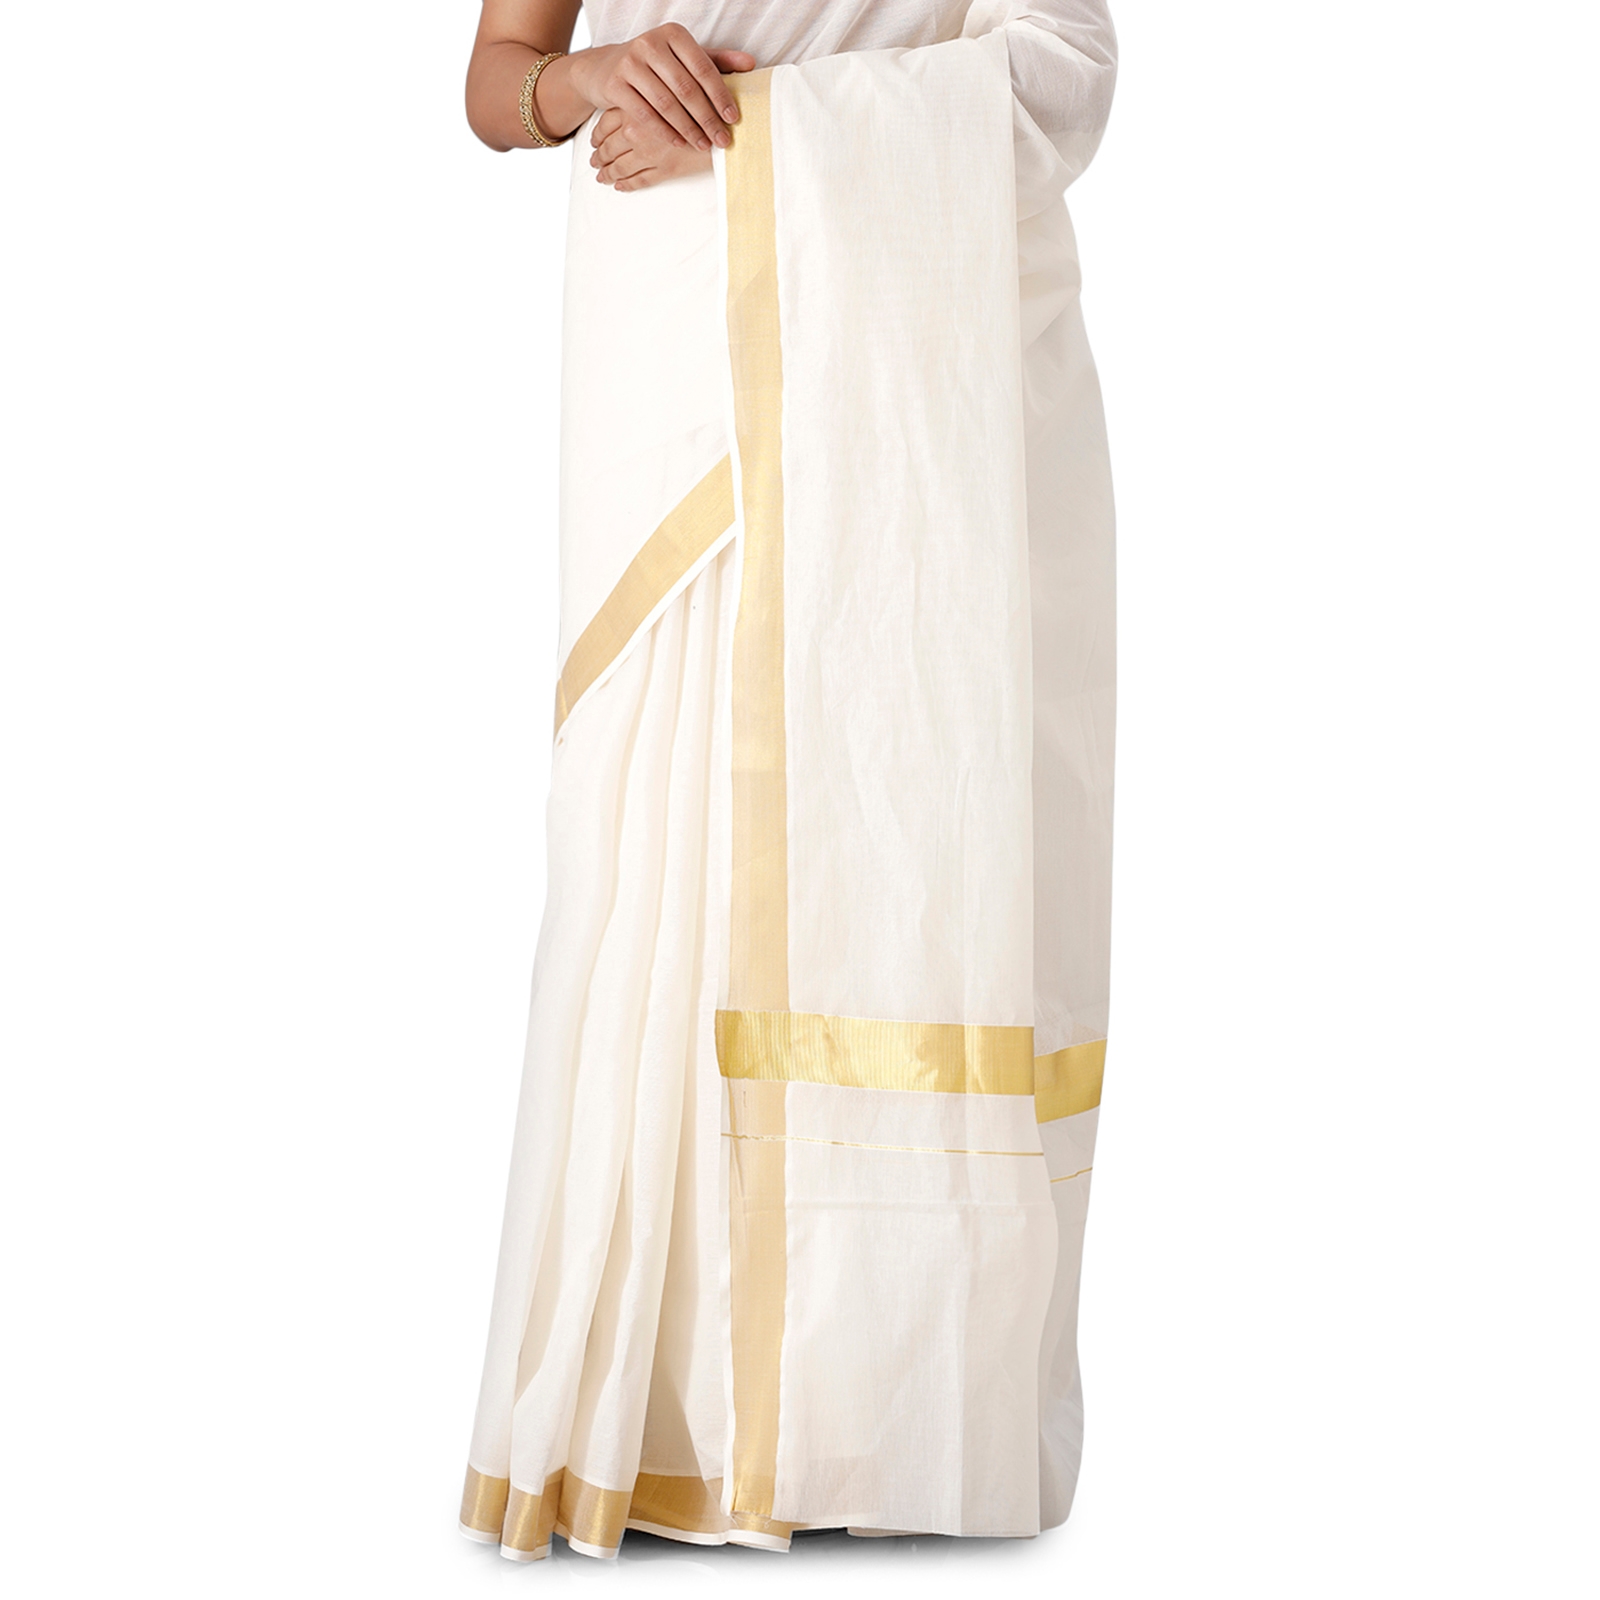 Ramraj Cotton | Ramraj Cotton Kerala Traditonal Cotton Saree for Women. 3